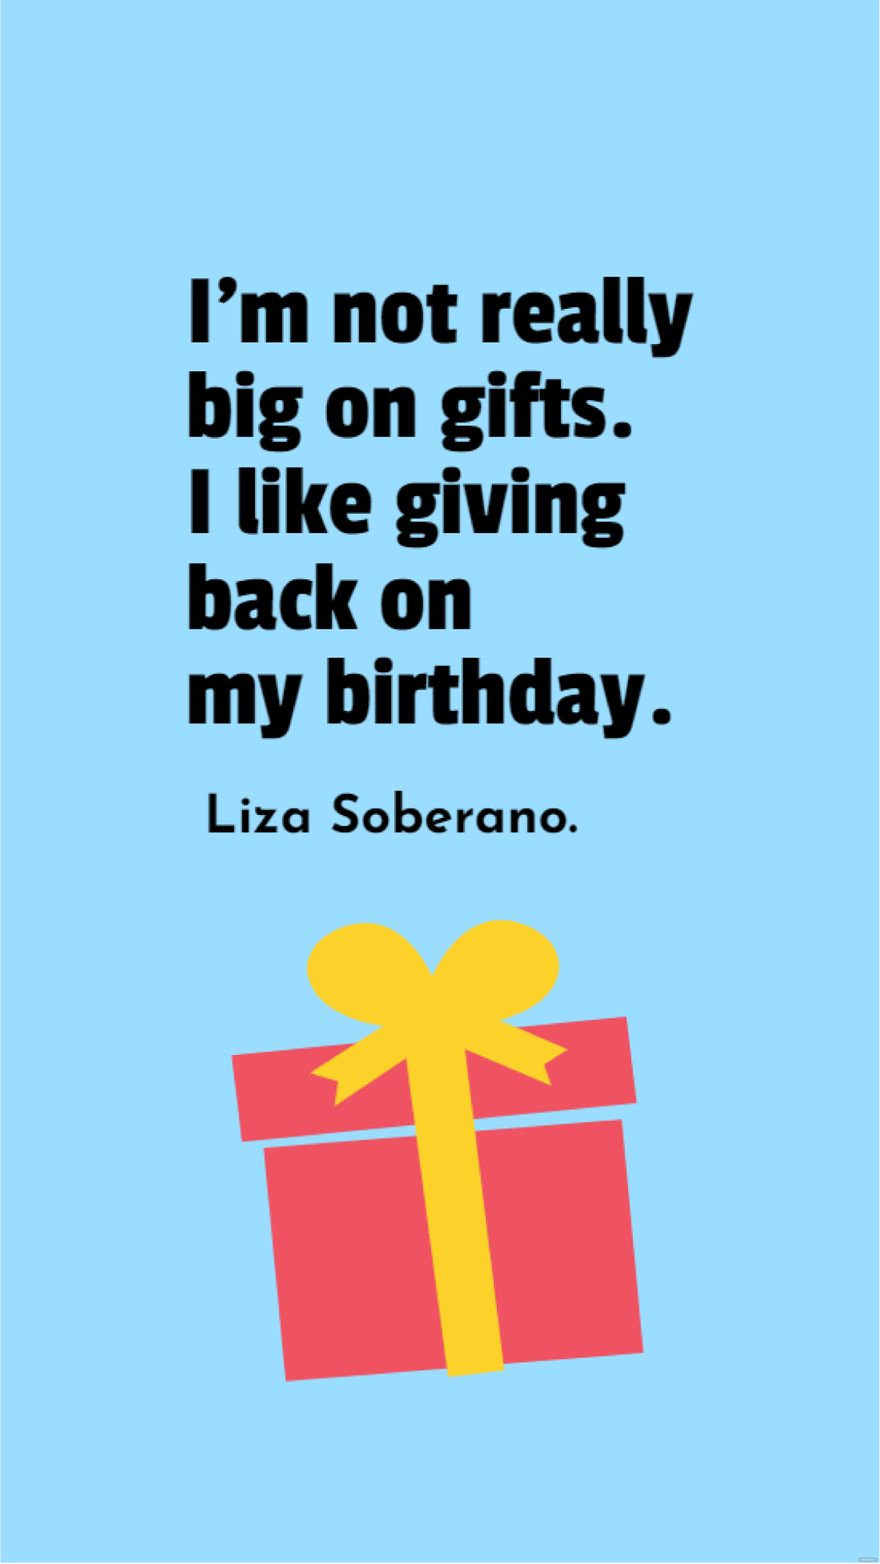 Free Liza Soberano - I'm not really big on gifts. I like giving back on my birthday.